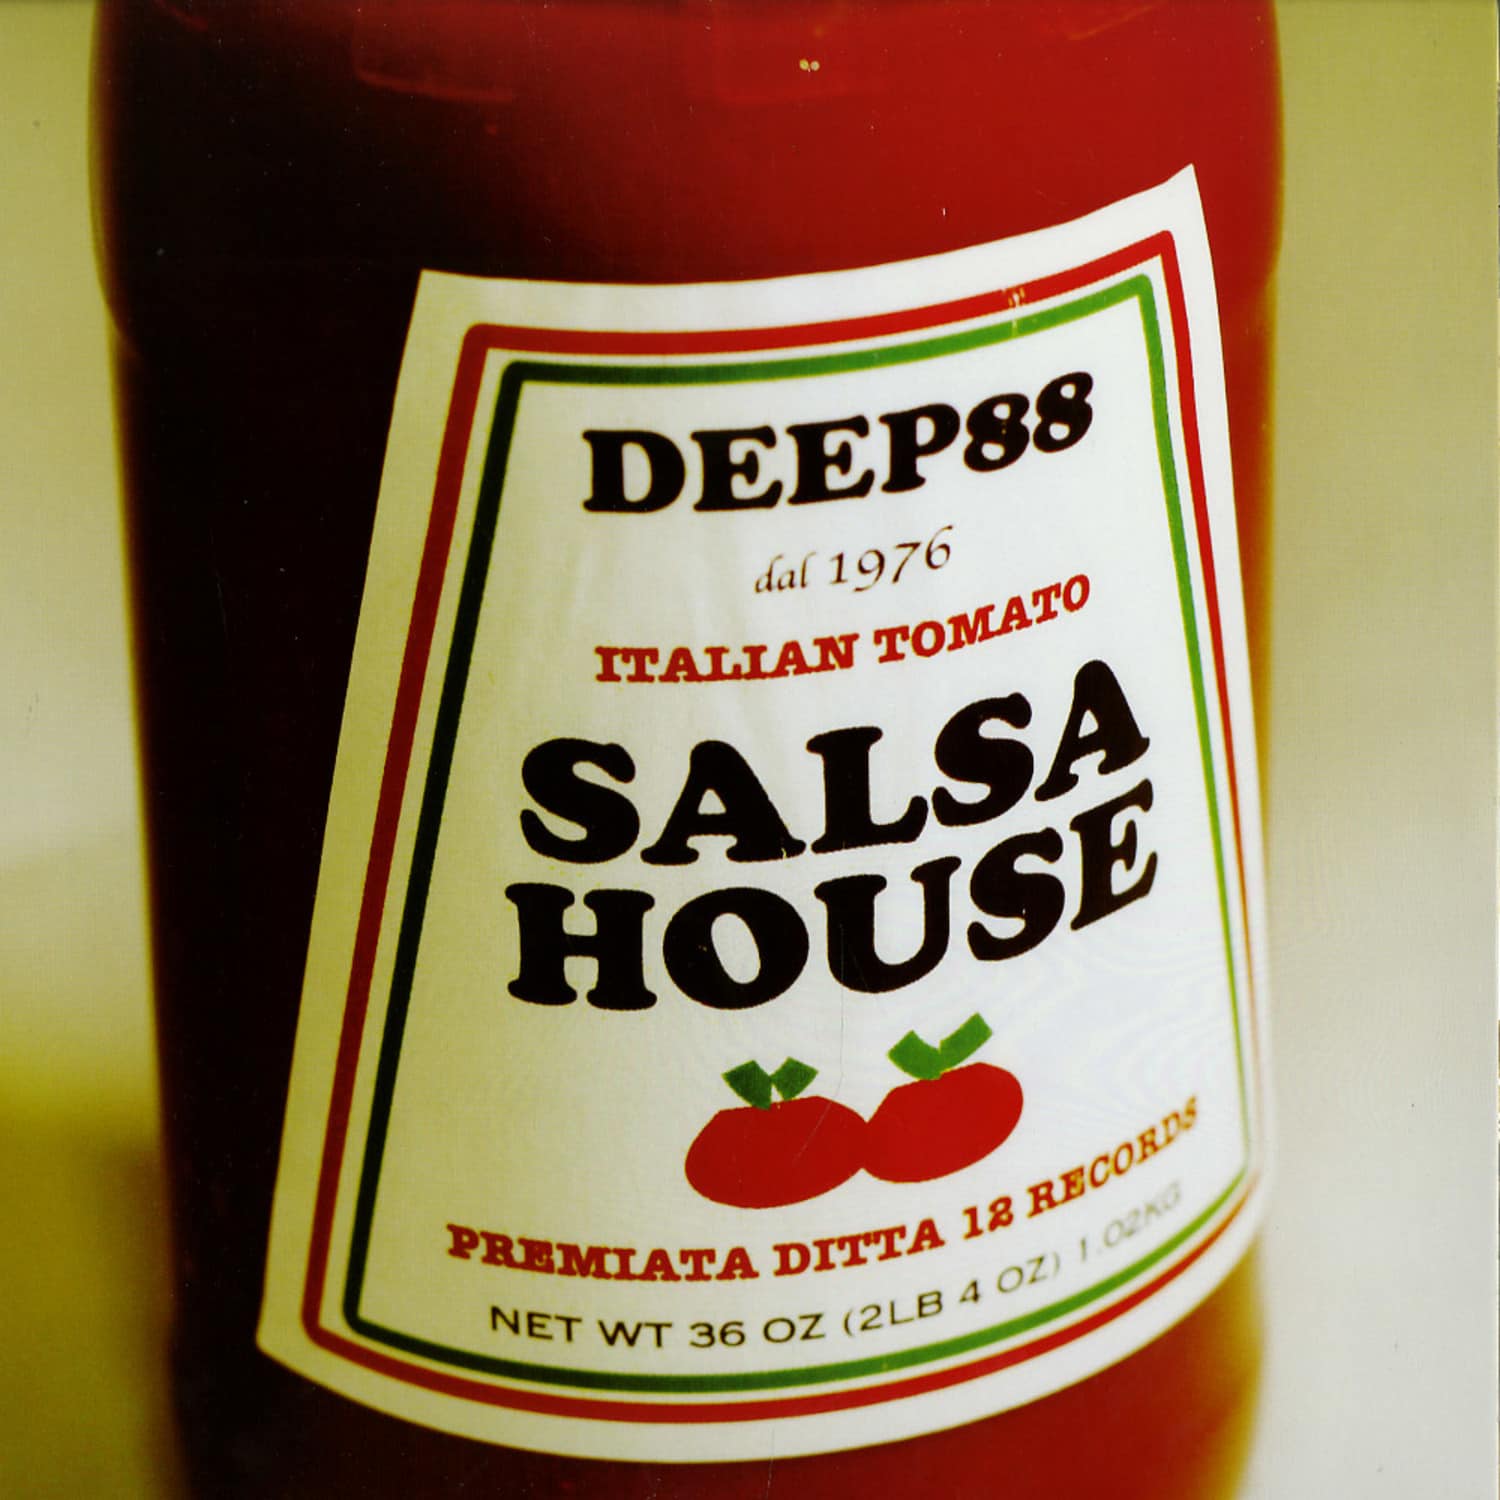 Deep88 - SALSA HOUSE